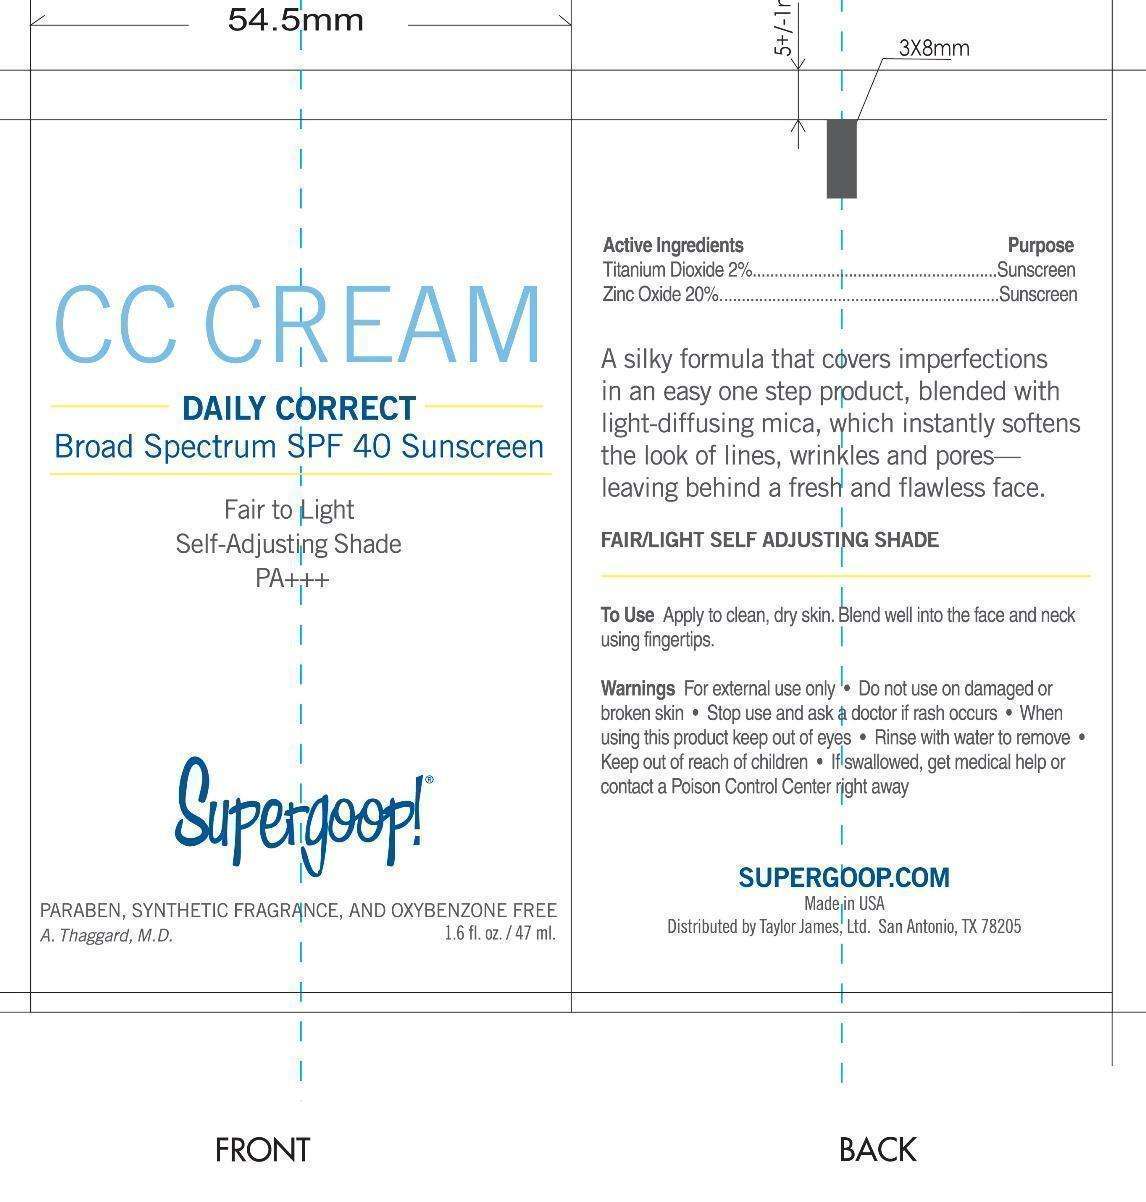 CC Cream Daily Correct Broad Spectrum SPF 40 Sunscreen